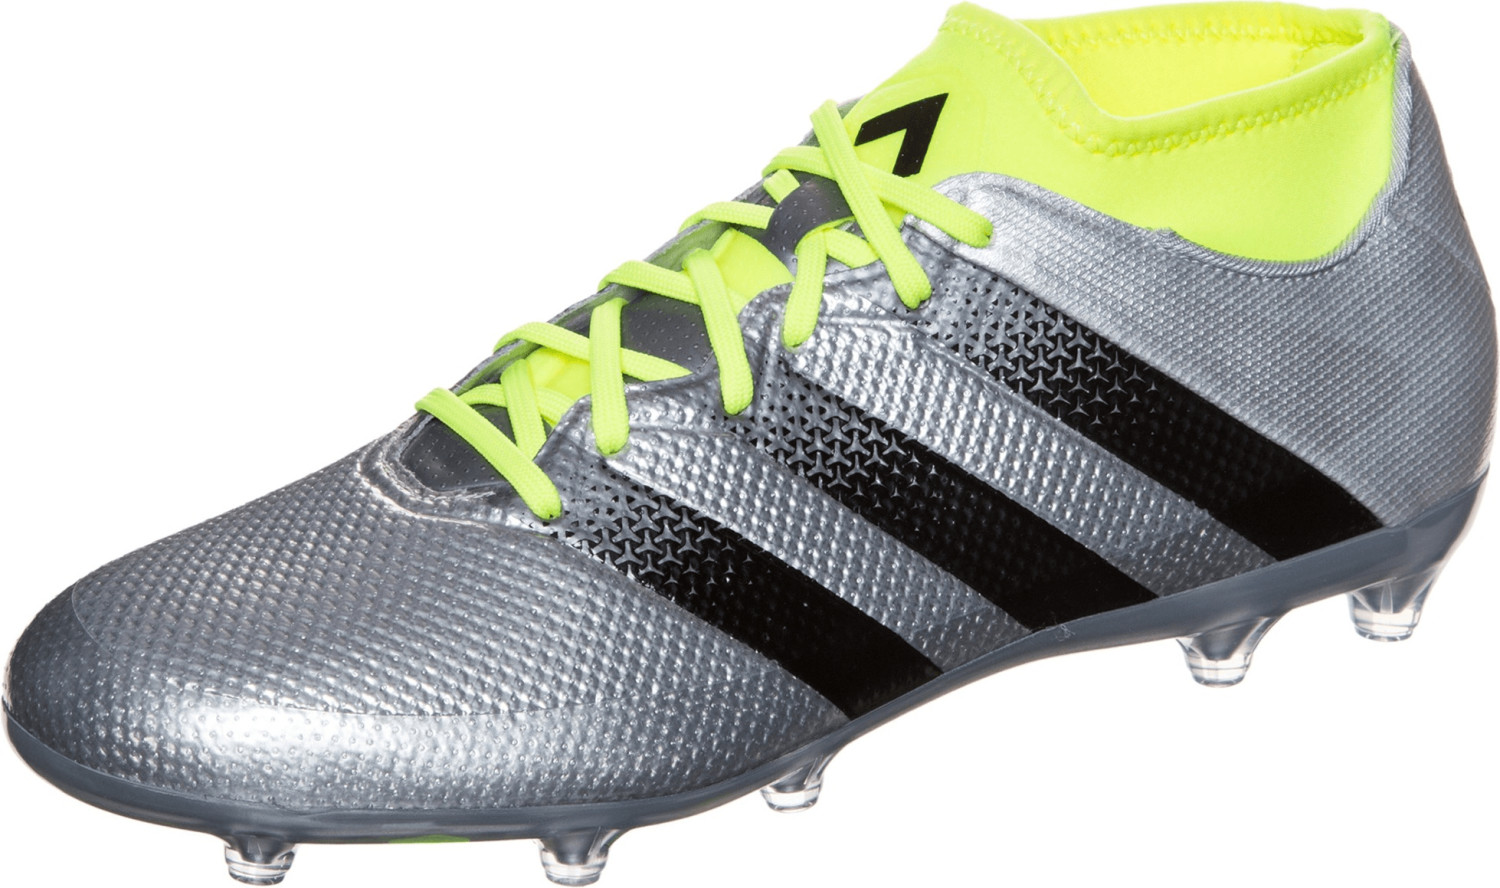 Adidas Ace 16.2 Primemesh FG/AG Men silver metallic/core black/solar yellow